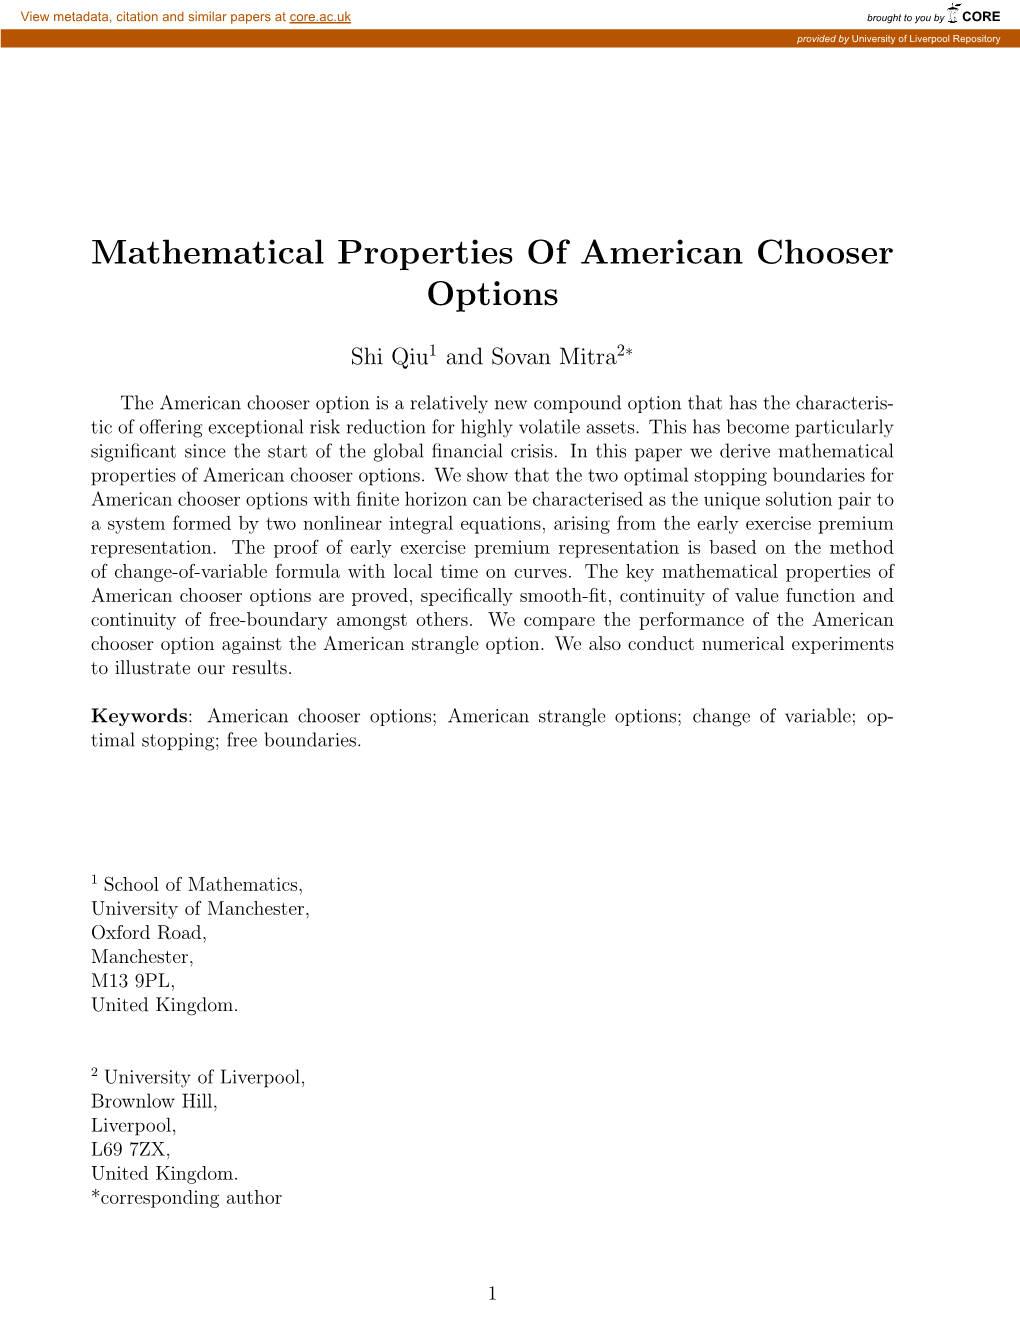 Mathematical Properties of American Chooser Options